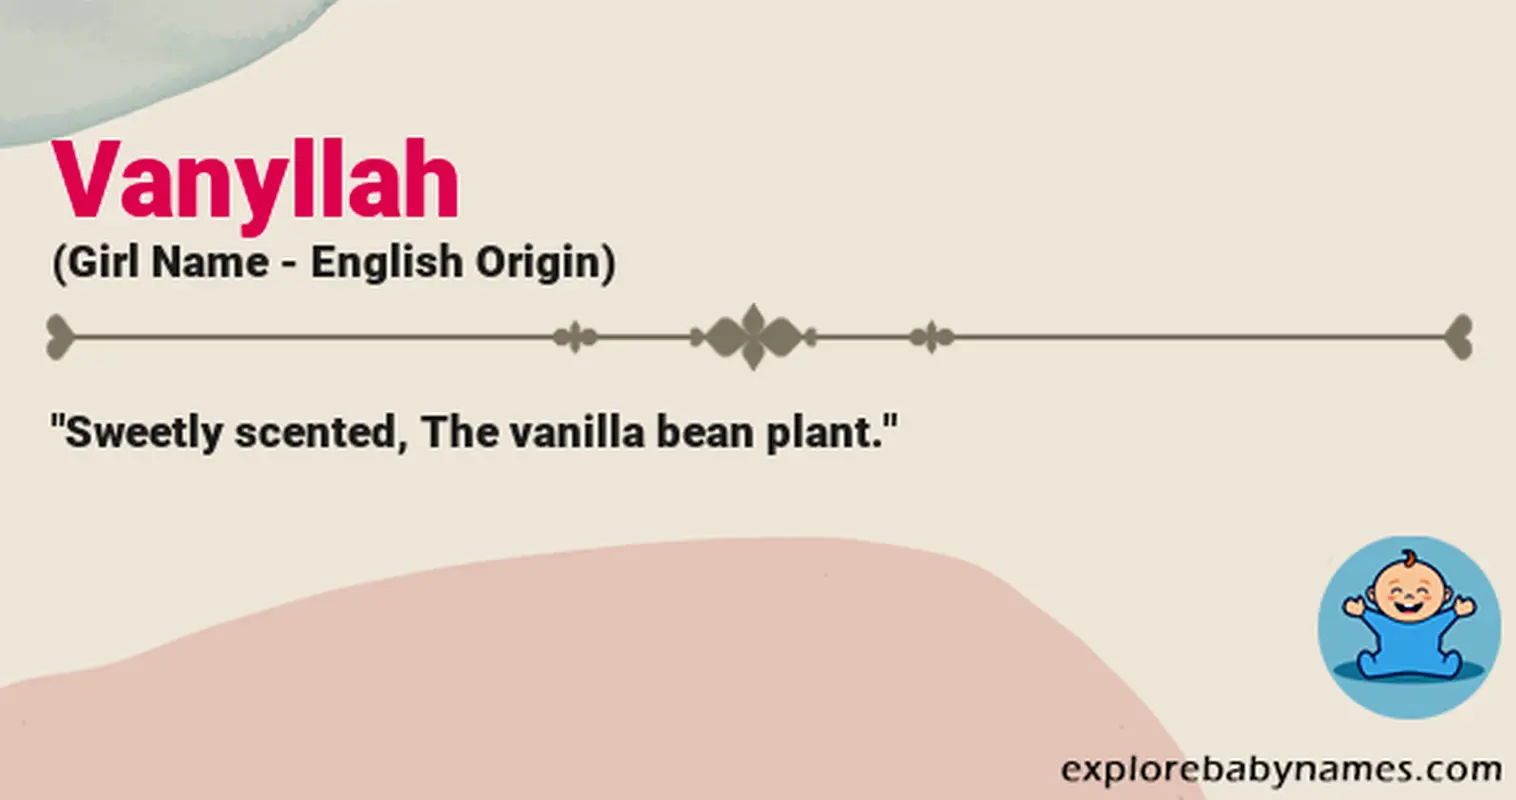 Meaning of Vanyllah